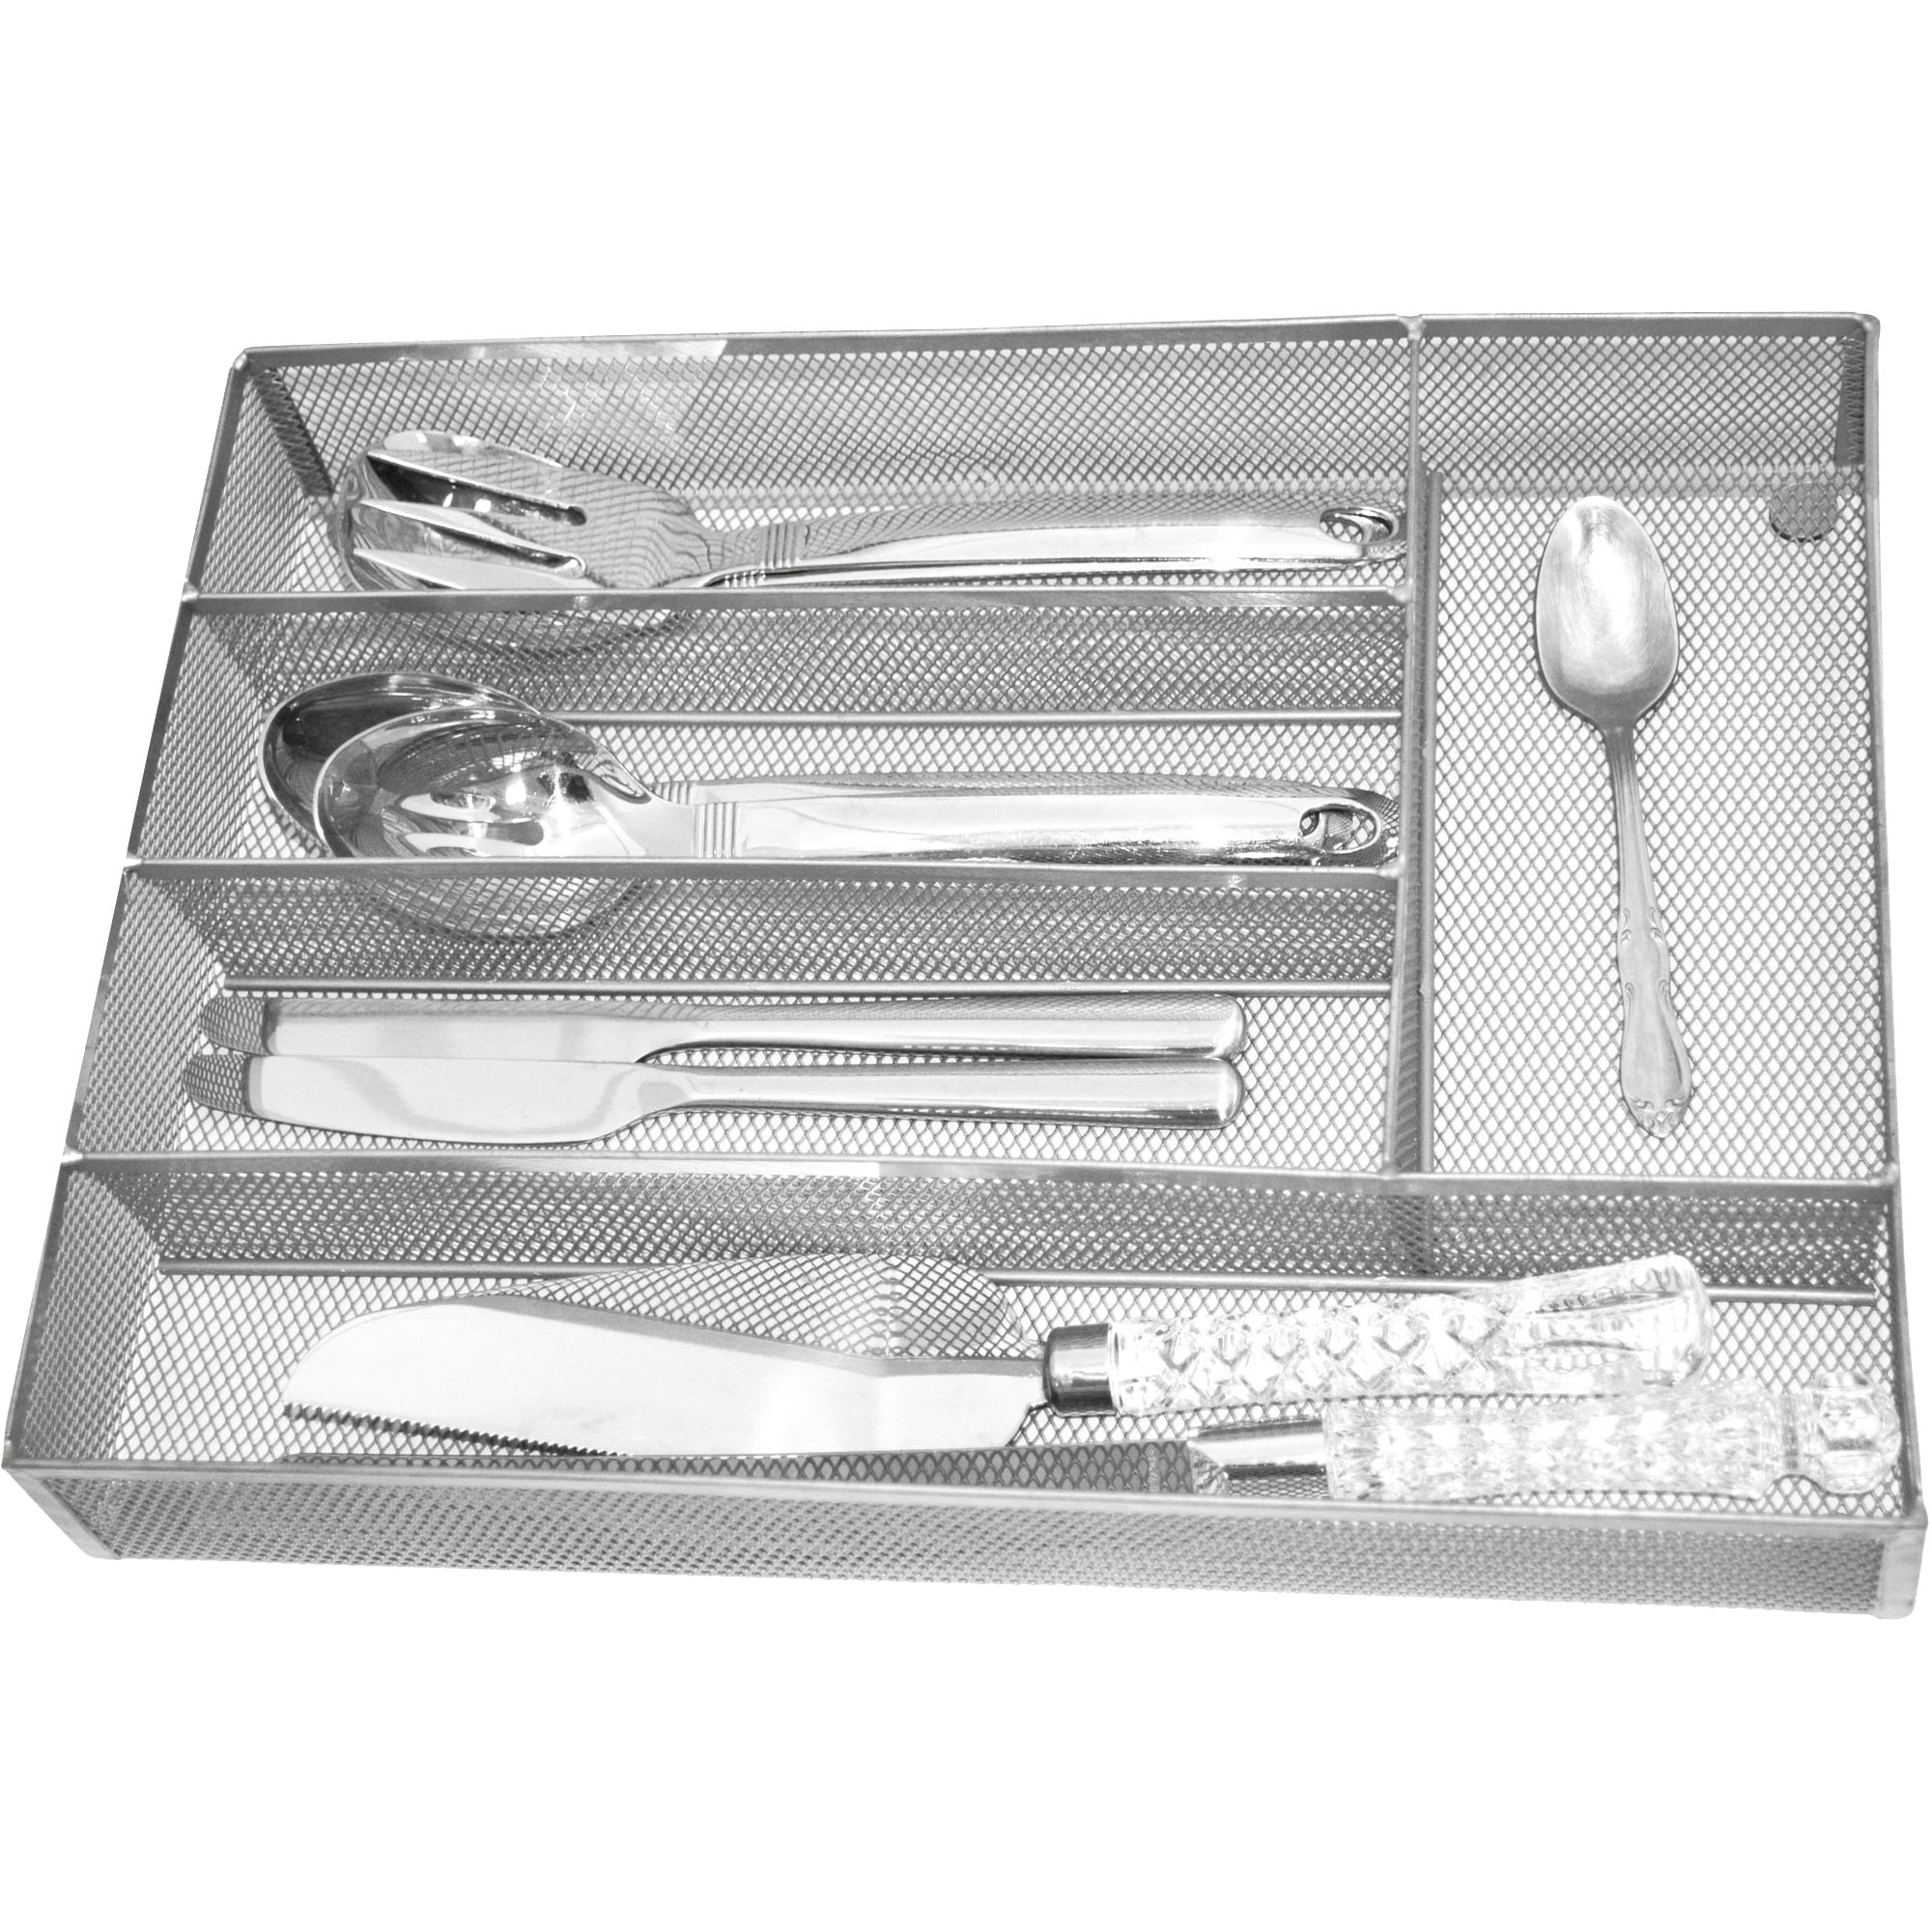 Copco 2555-7873 Mesh 5-Part in-Drawer Cutlery Organizer